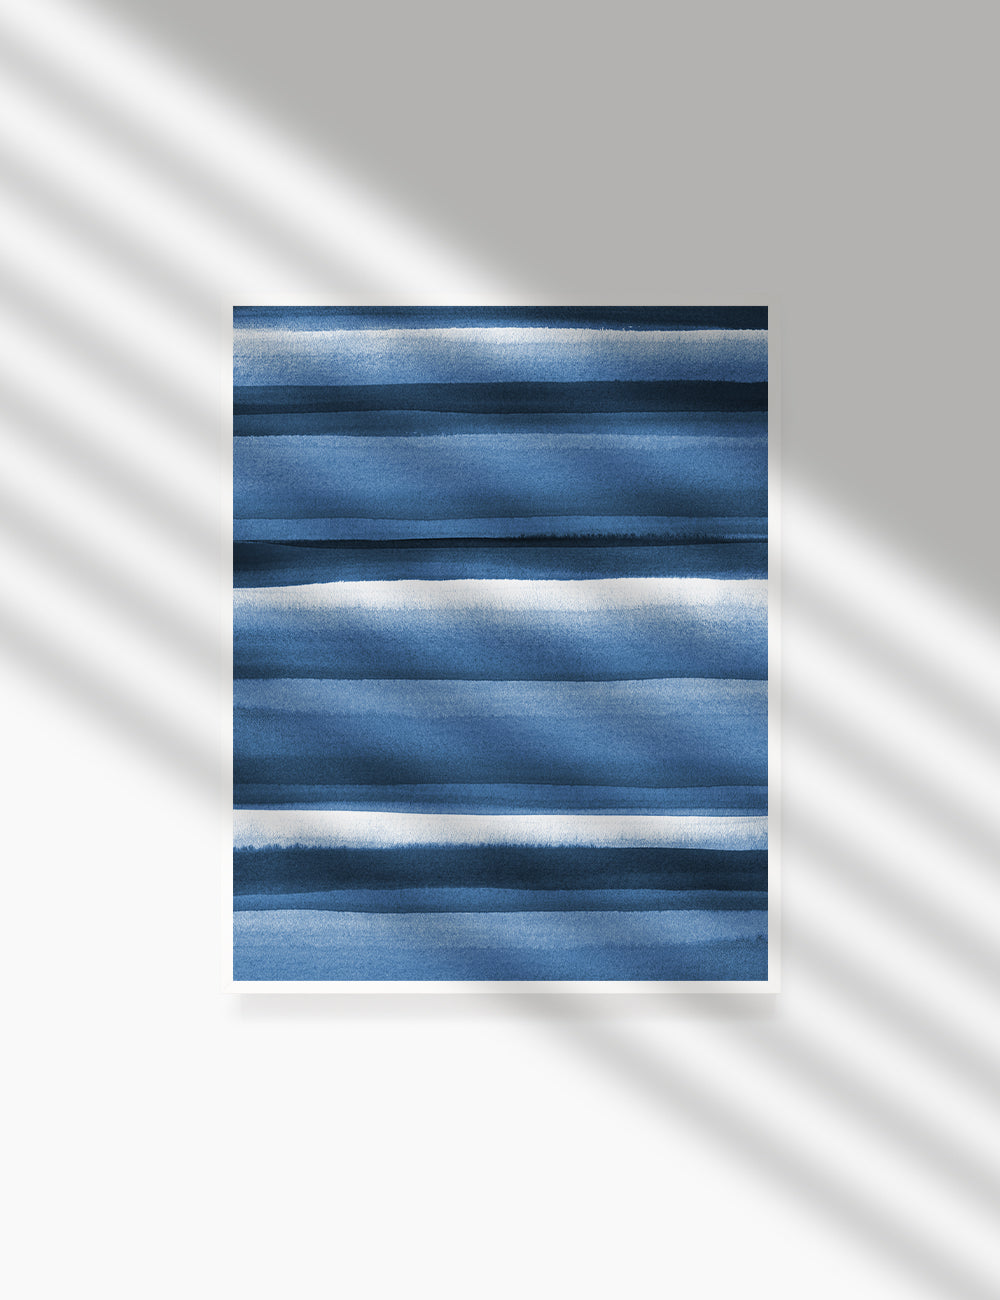 BLUE OCEAN WAVES. WATERCOLOR PAINTING. Abstract Art. Printable Wall Art Illustration. - PAPER MOON Art & Design